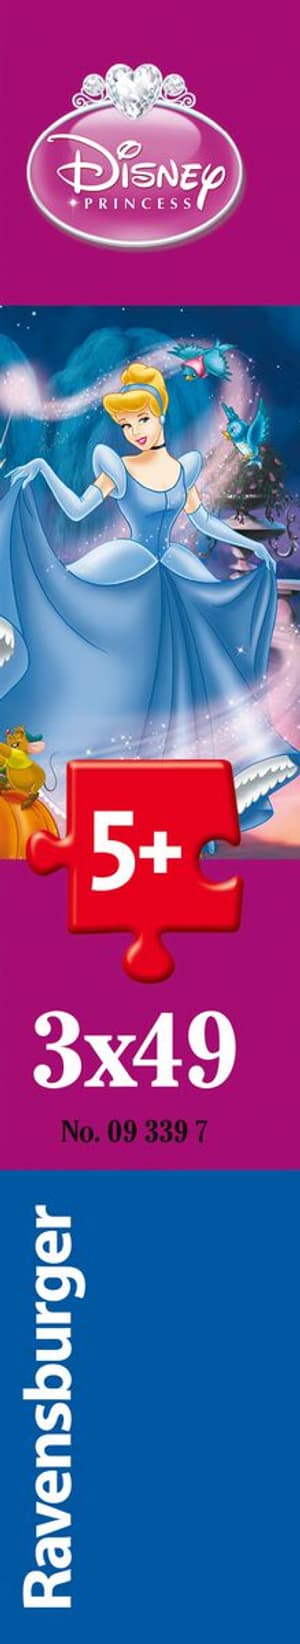 RVB Puzzle 3X49 T. Disney Princess